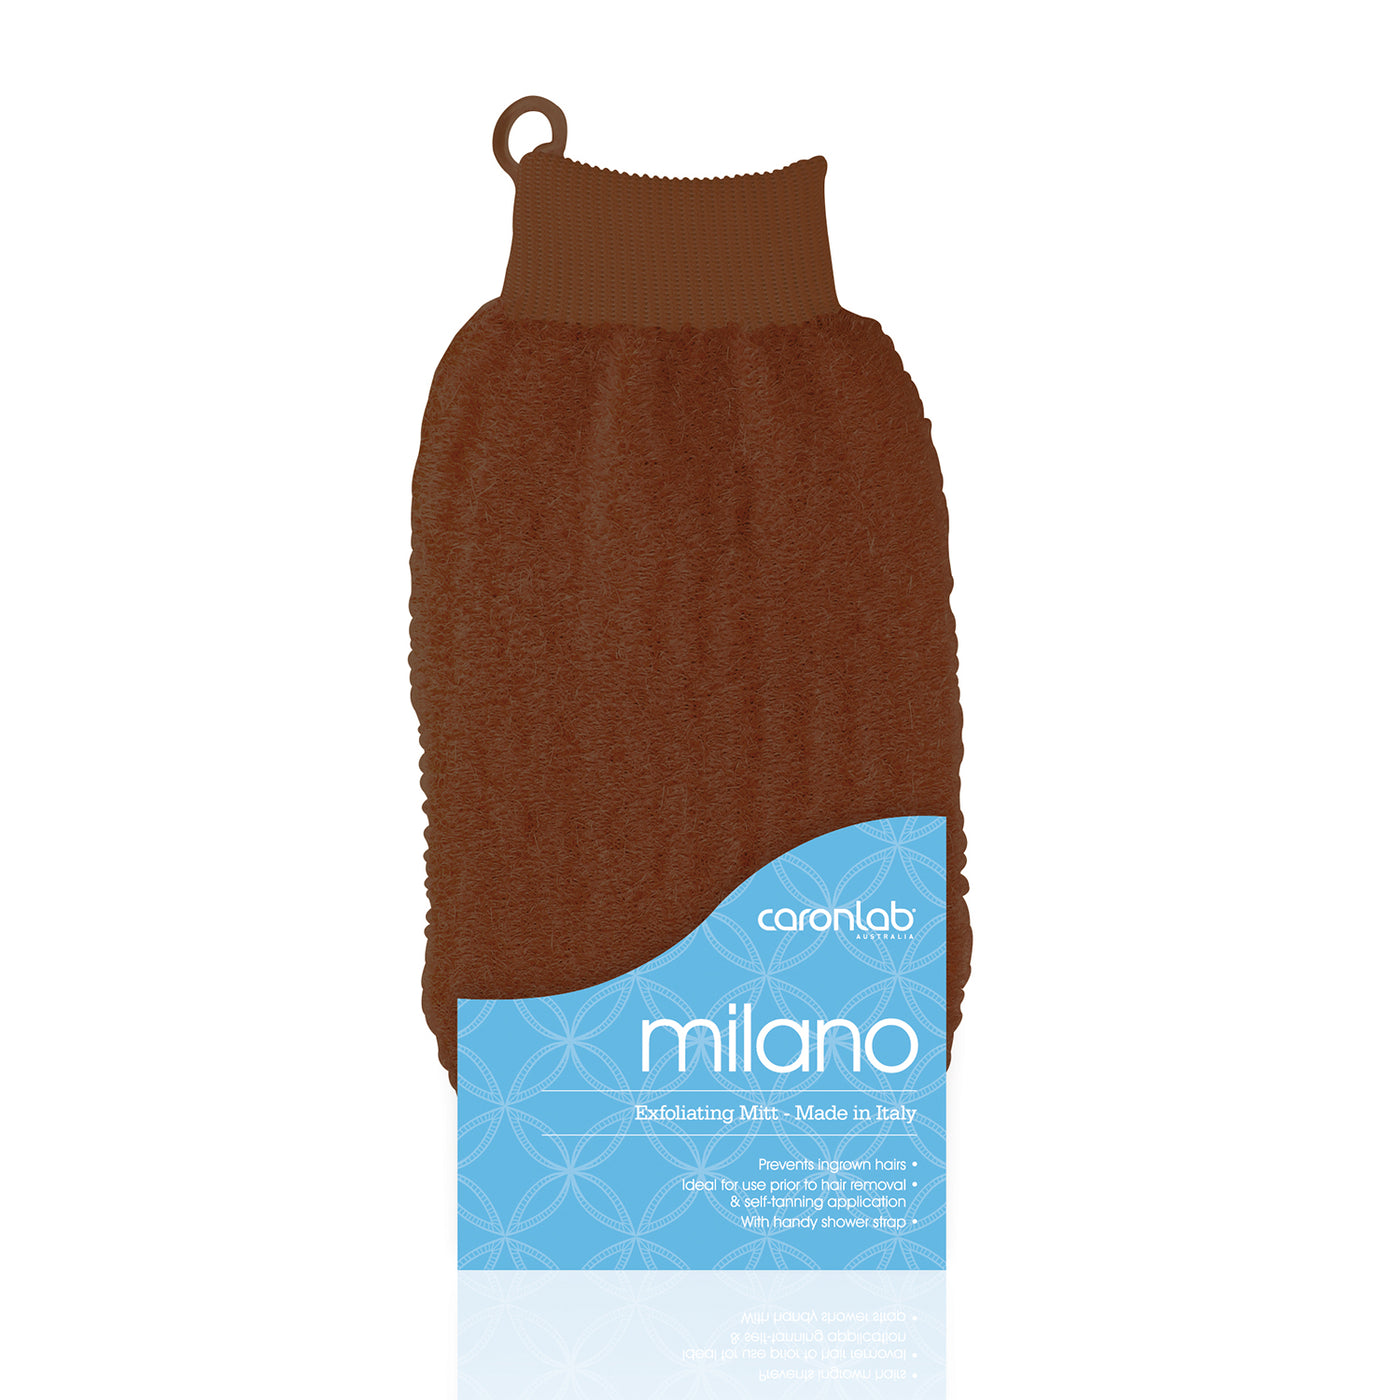 Caronlab Milano Exfoliating Massage Mitt brown